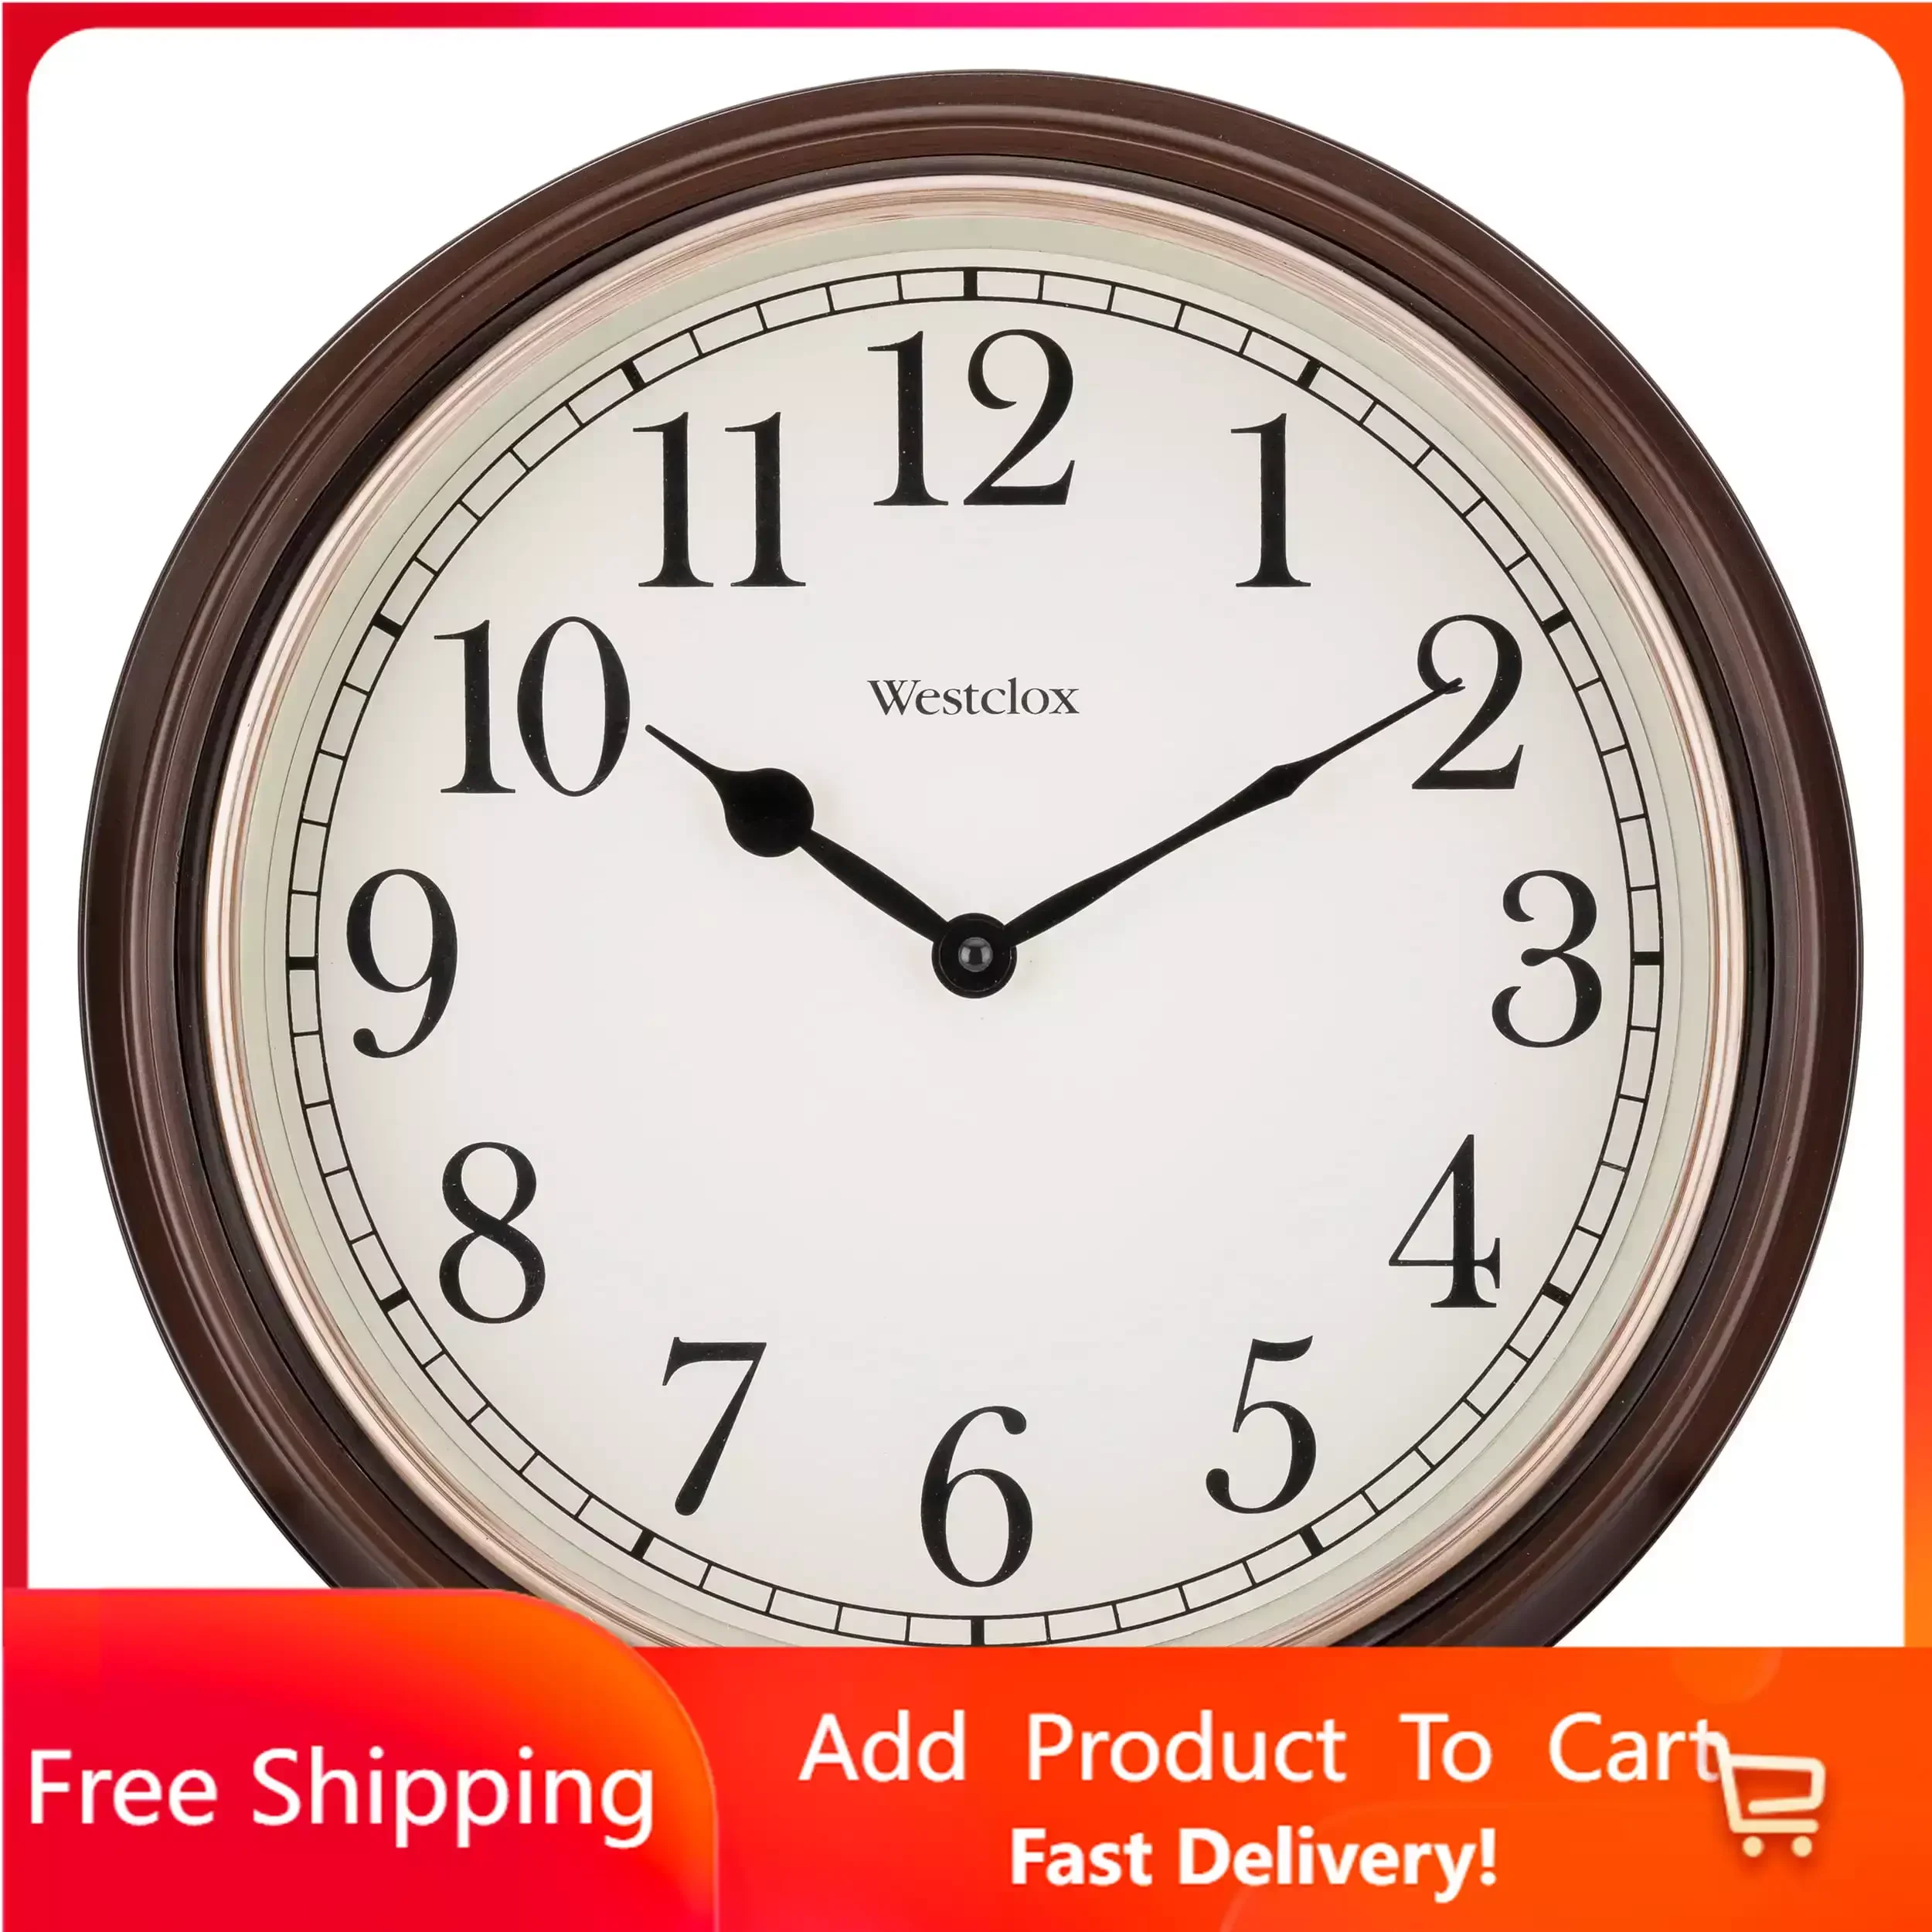 

15.5" Round Woodgrain Look Analog QA Wall Clock Free Shipping